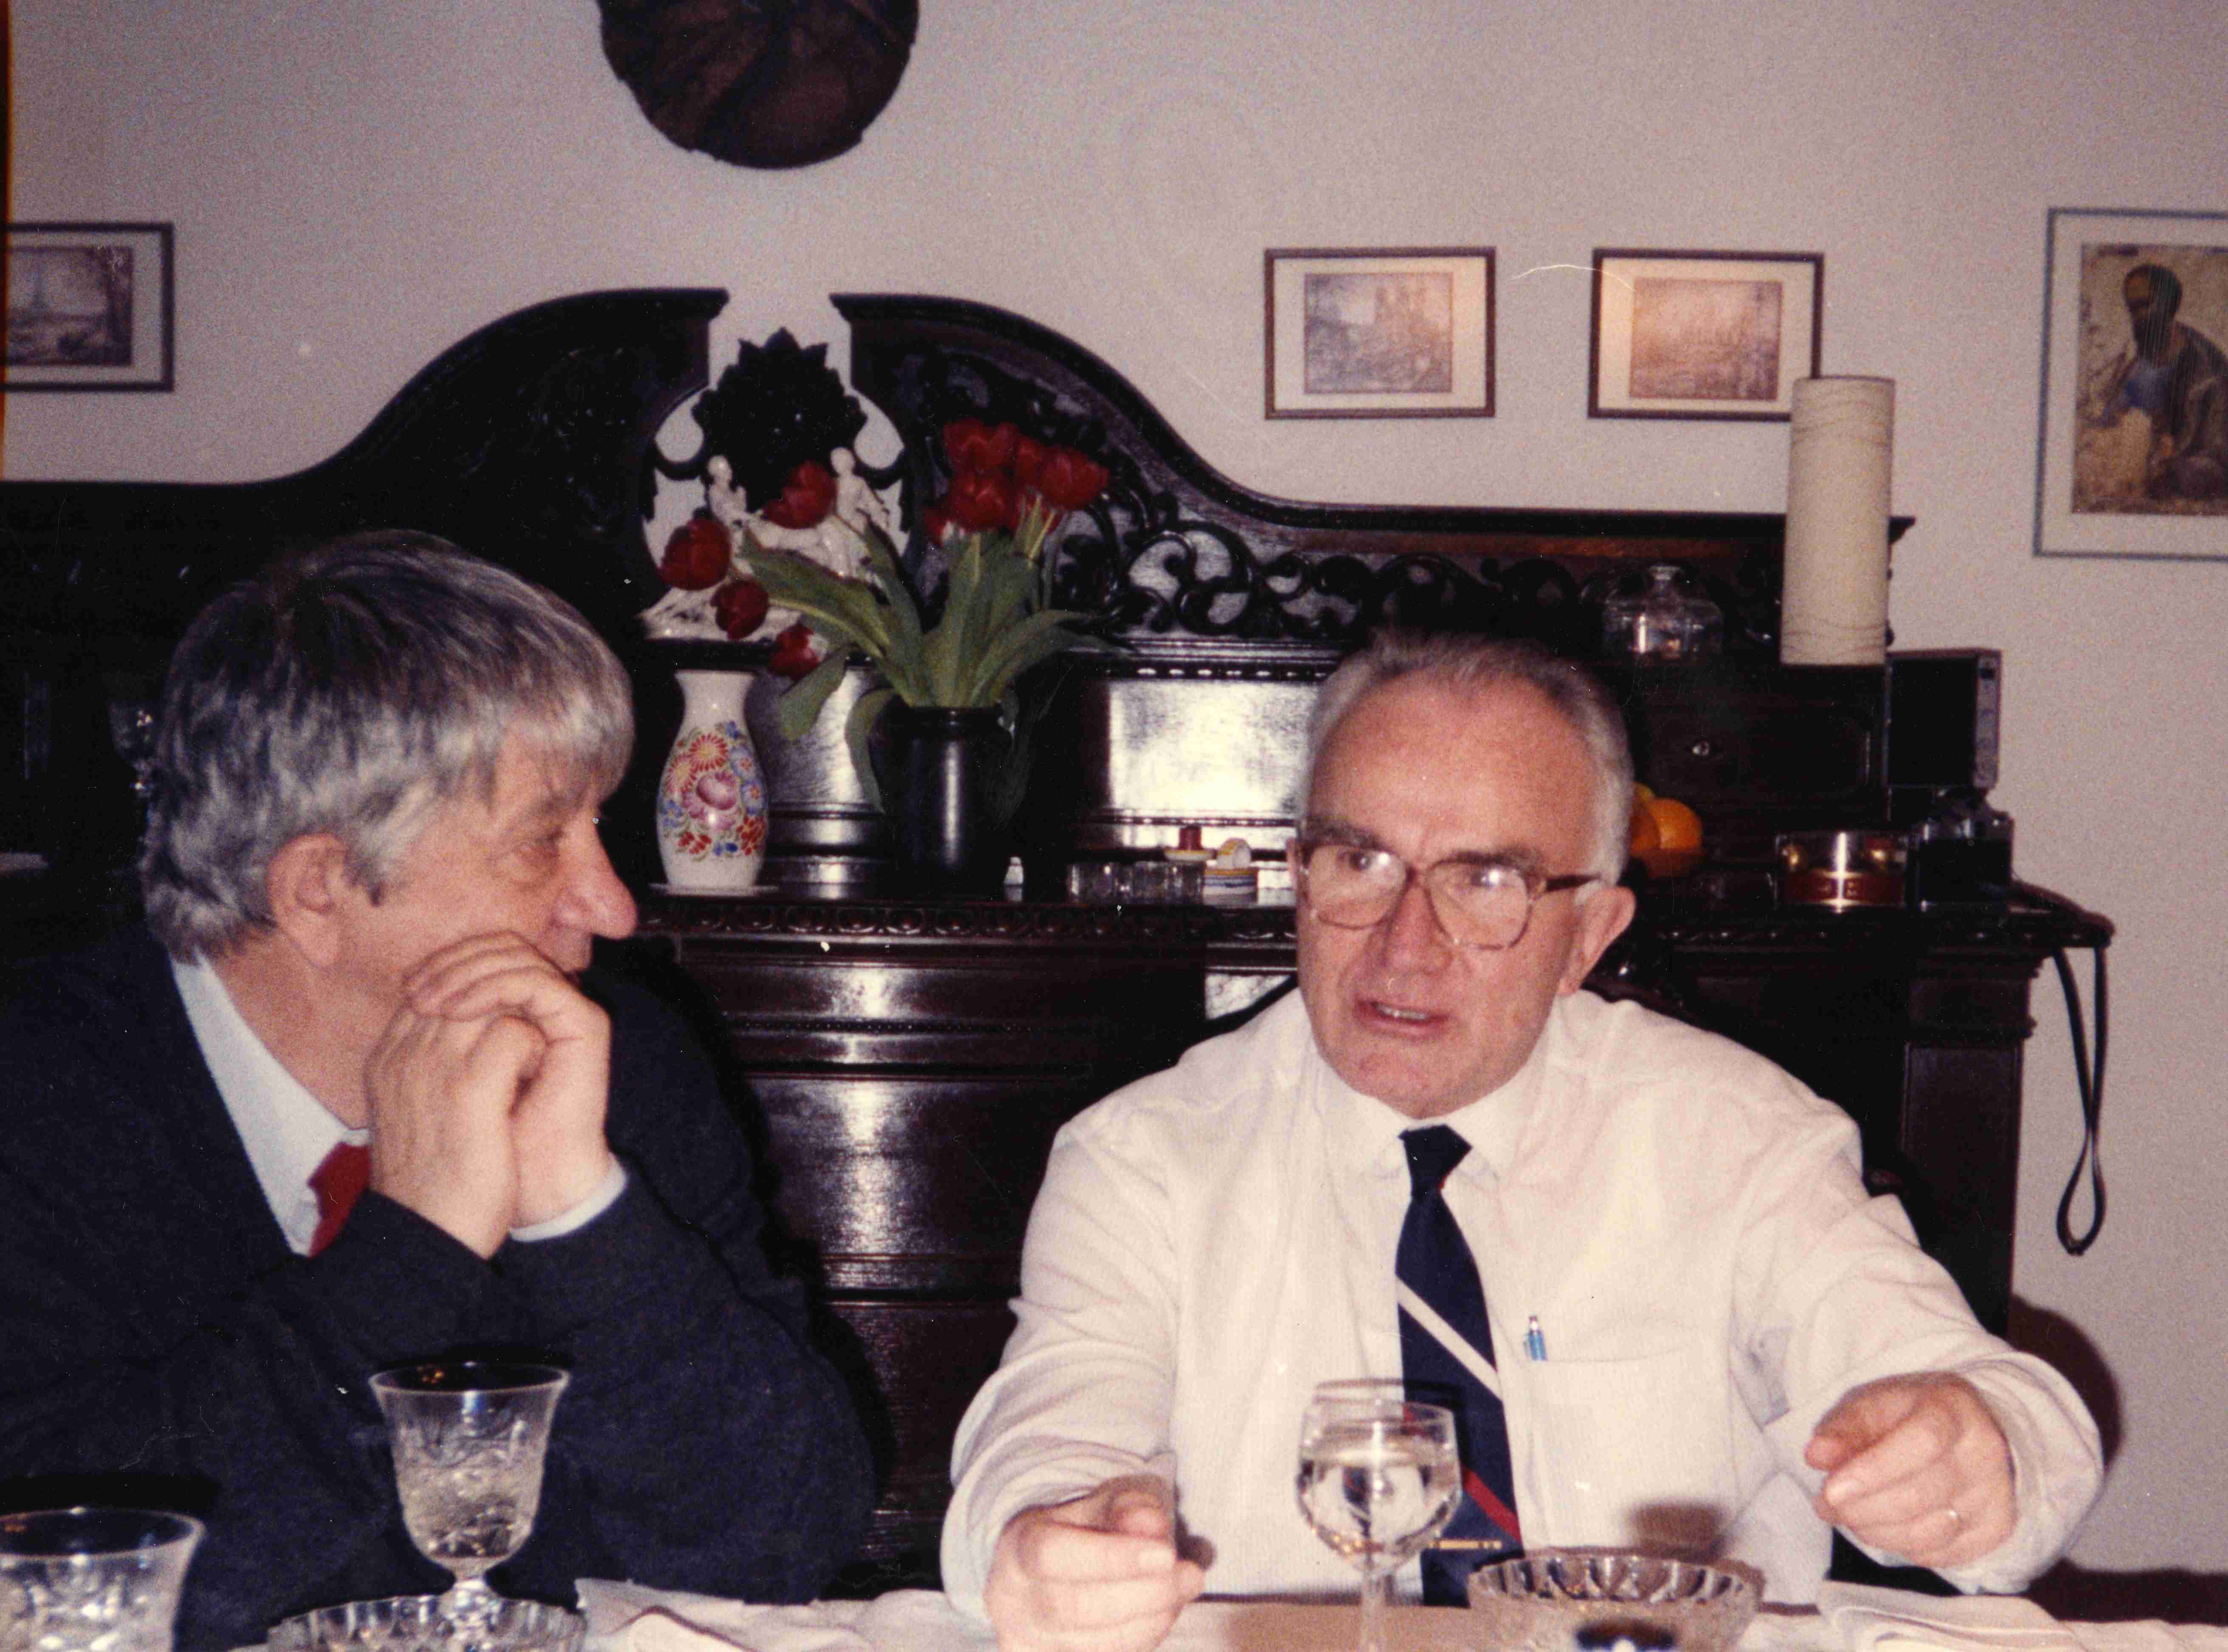 Ľubomír Ďurovič (on the right side)